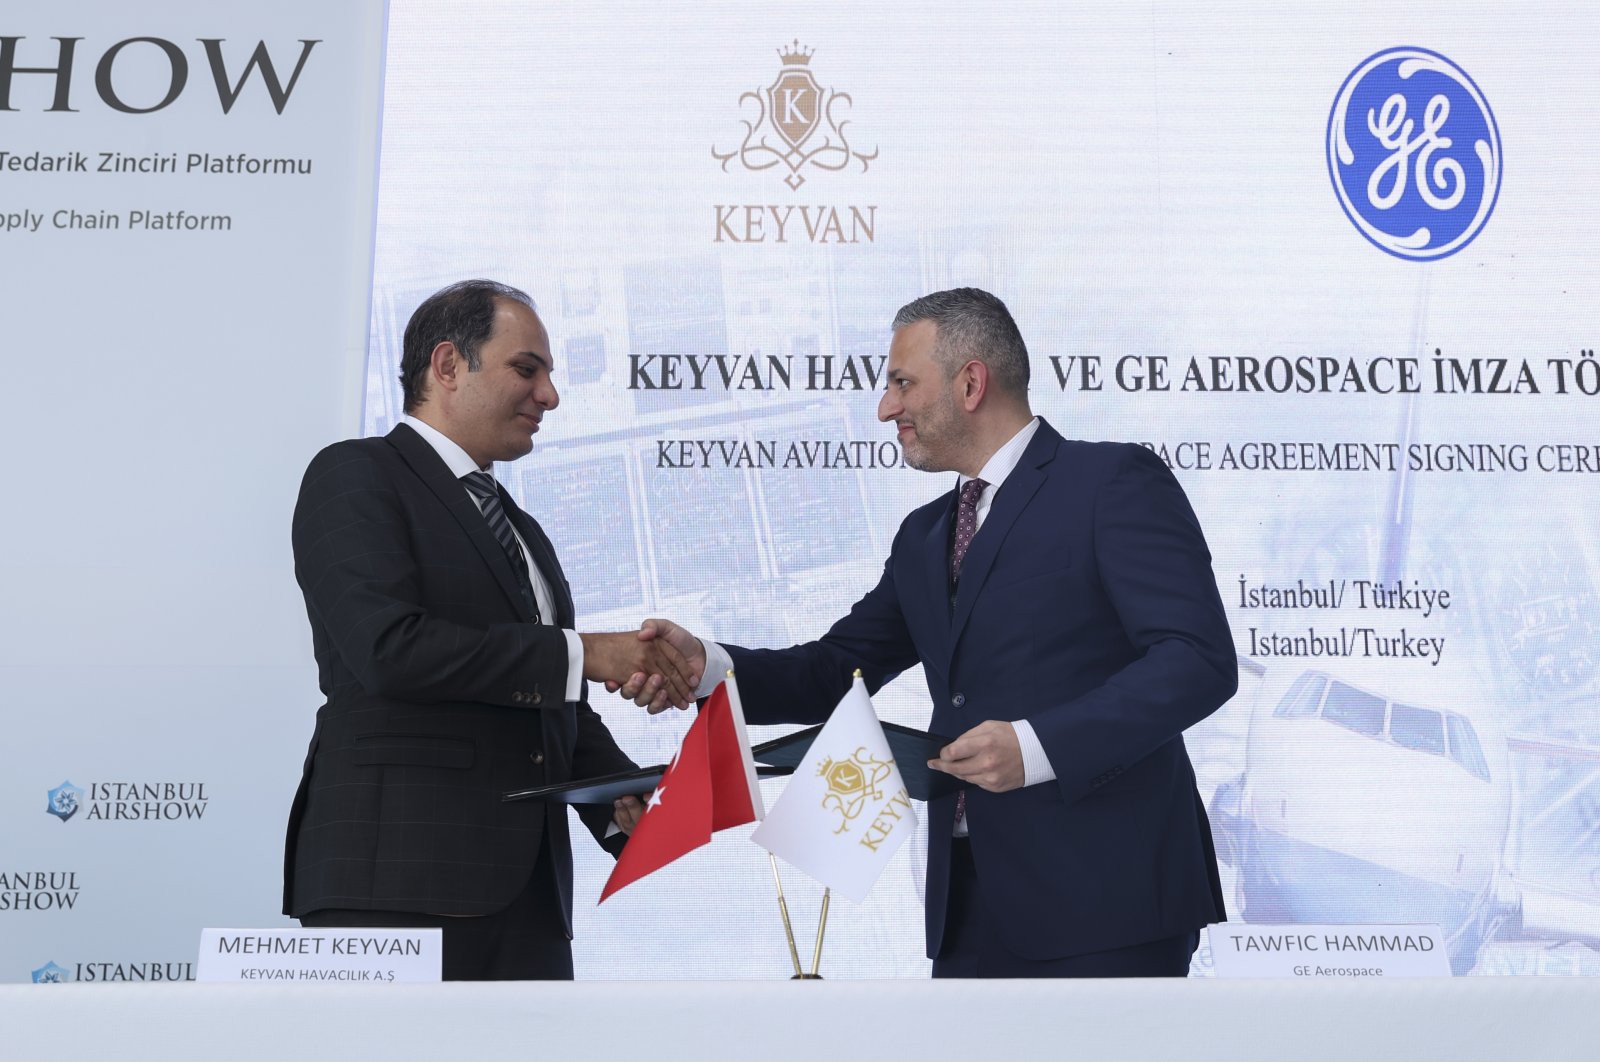 Keyvan Aviation Turki menandatangani kesepakatan kerja sama dengan GE Aerospace